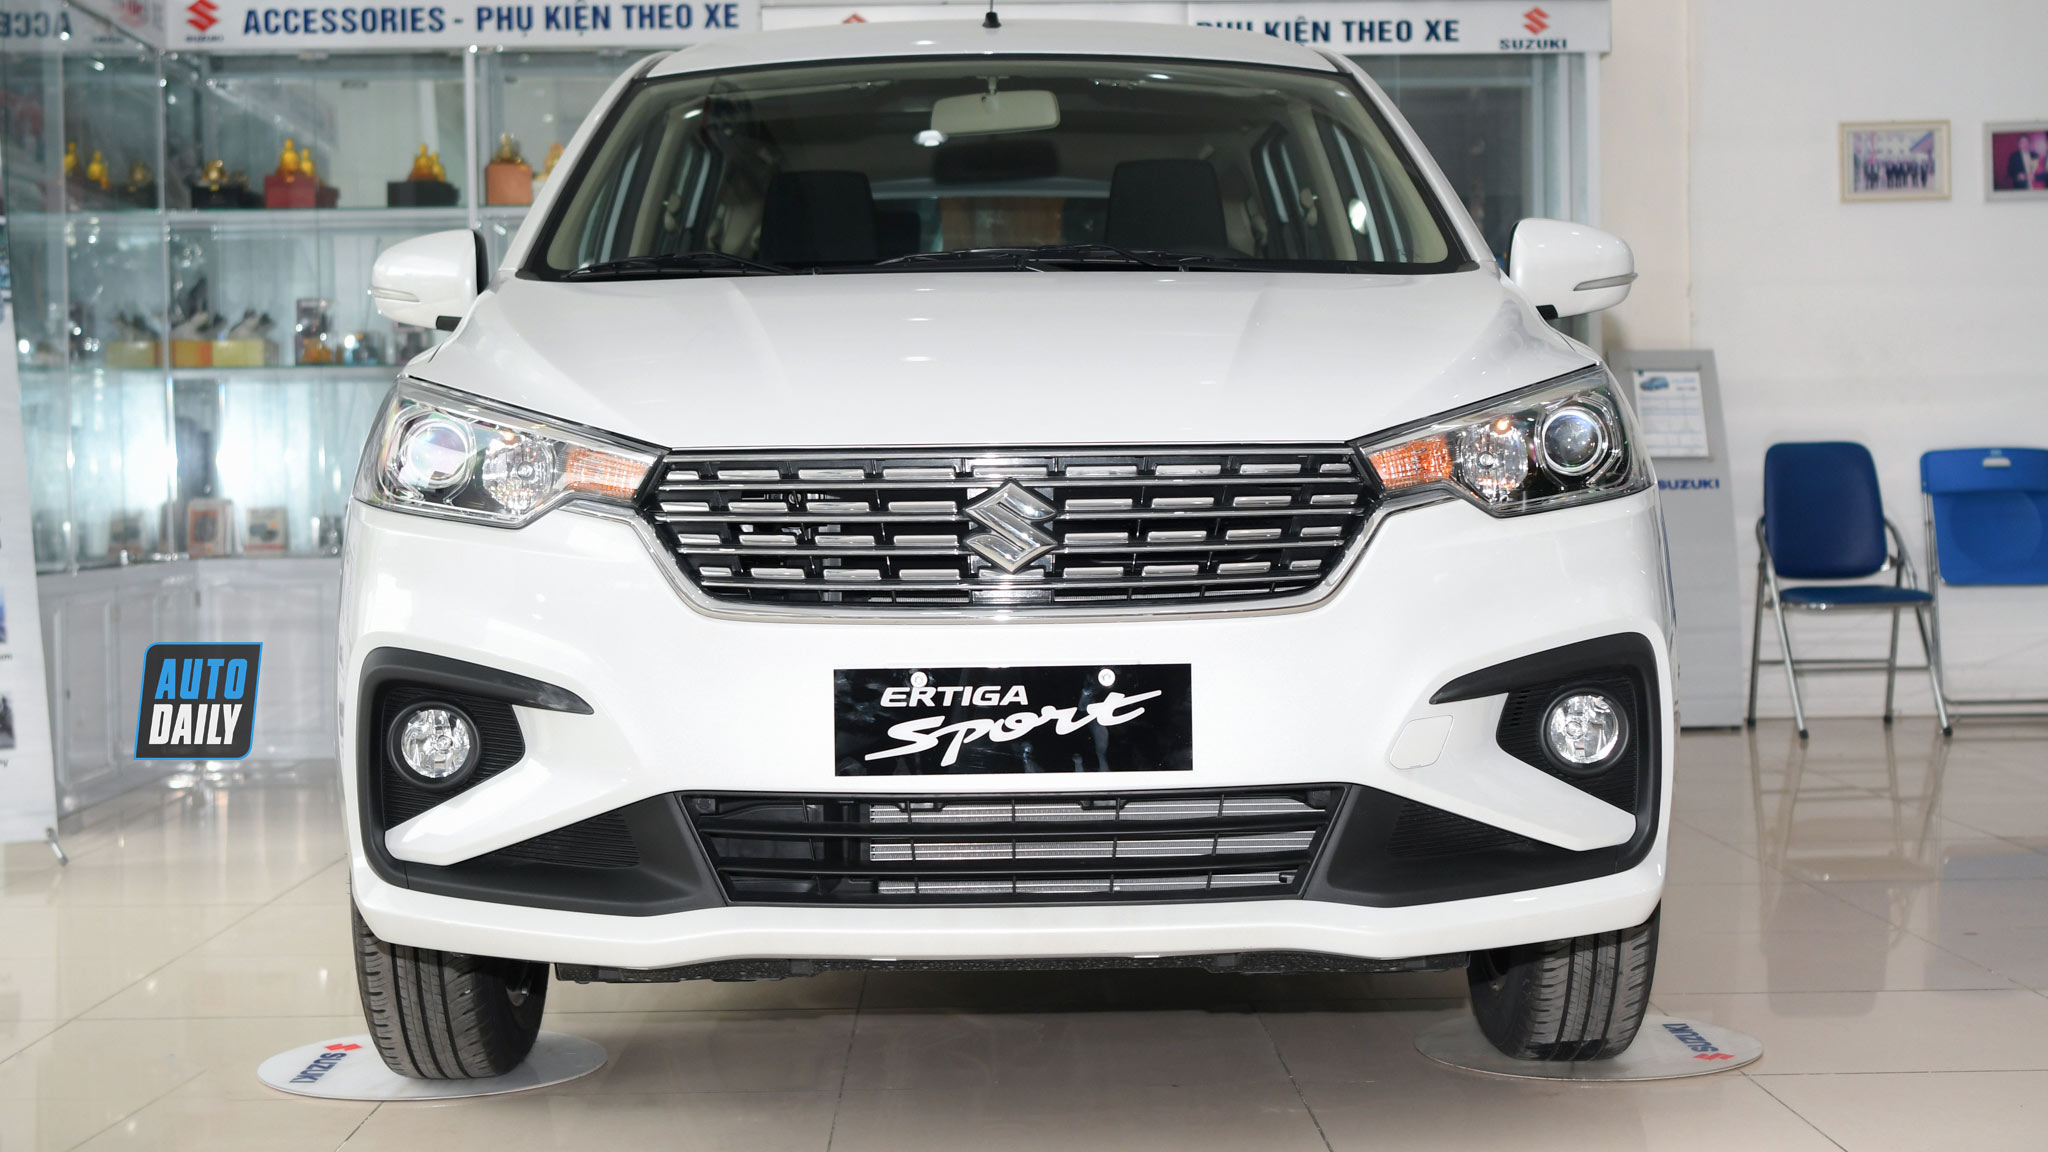 Soi chi tiết Suzuki Ertiga Sport giá 559 triệu